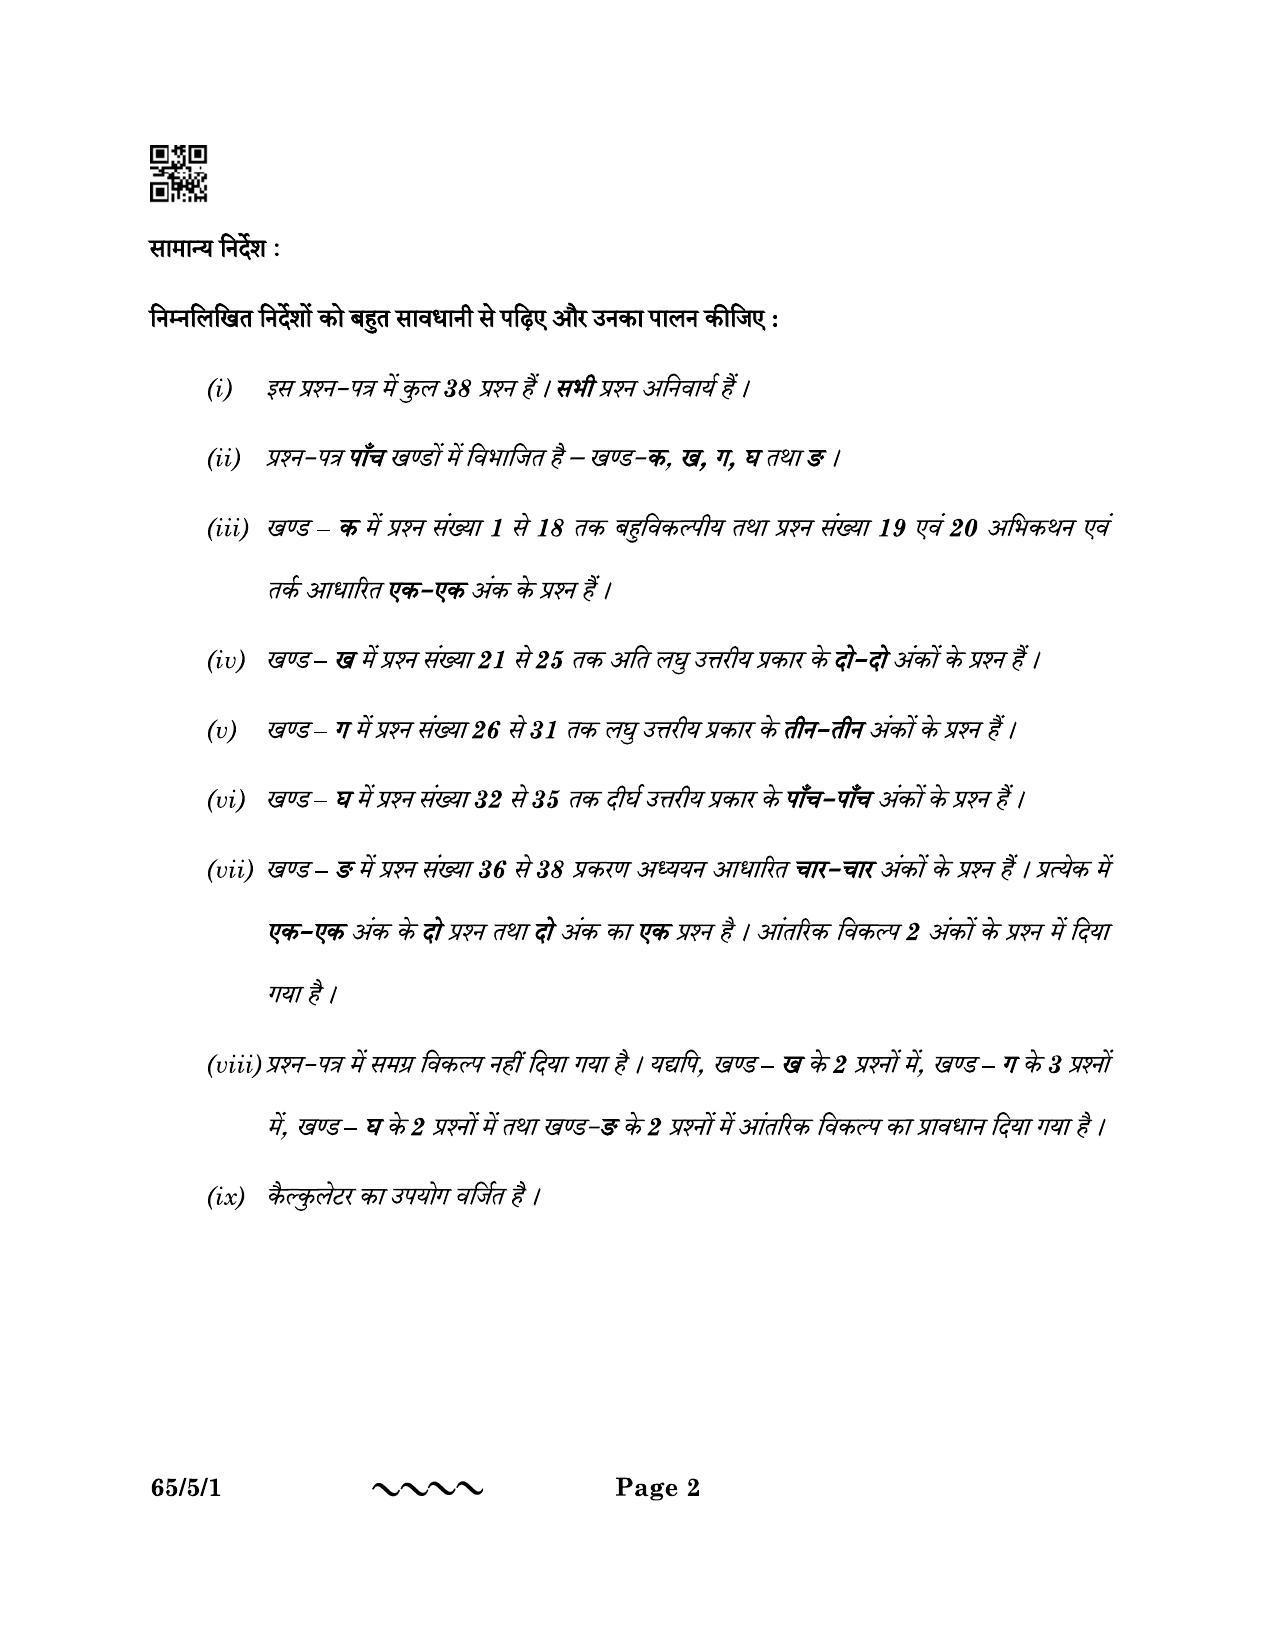 CBSE Class 12 65-5-1 MATHEMATICS 2023 Question Paper - Page 2